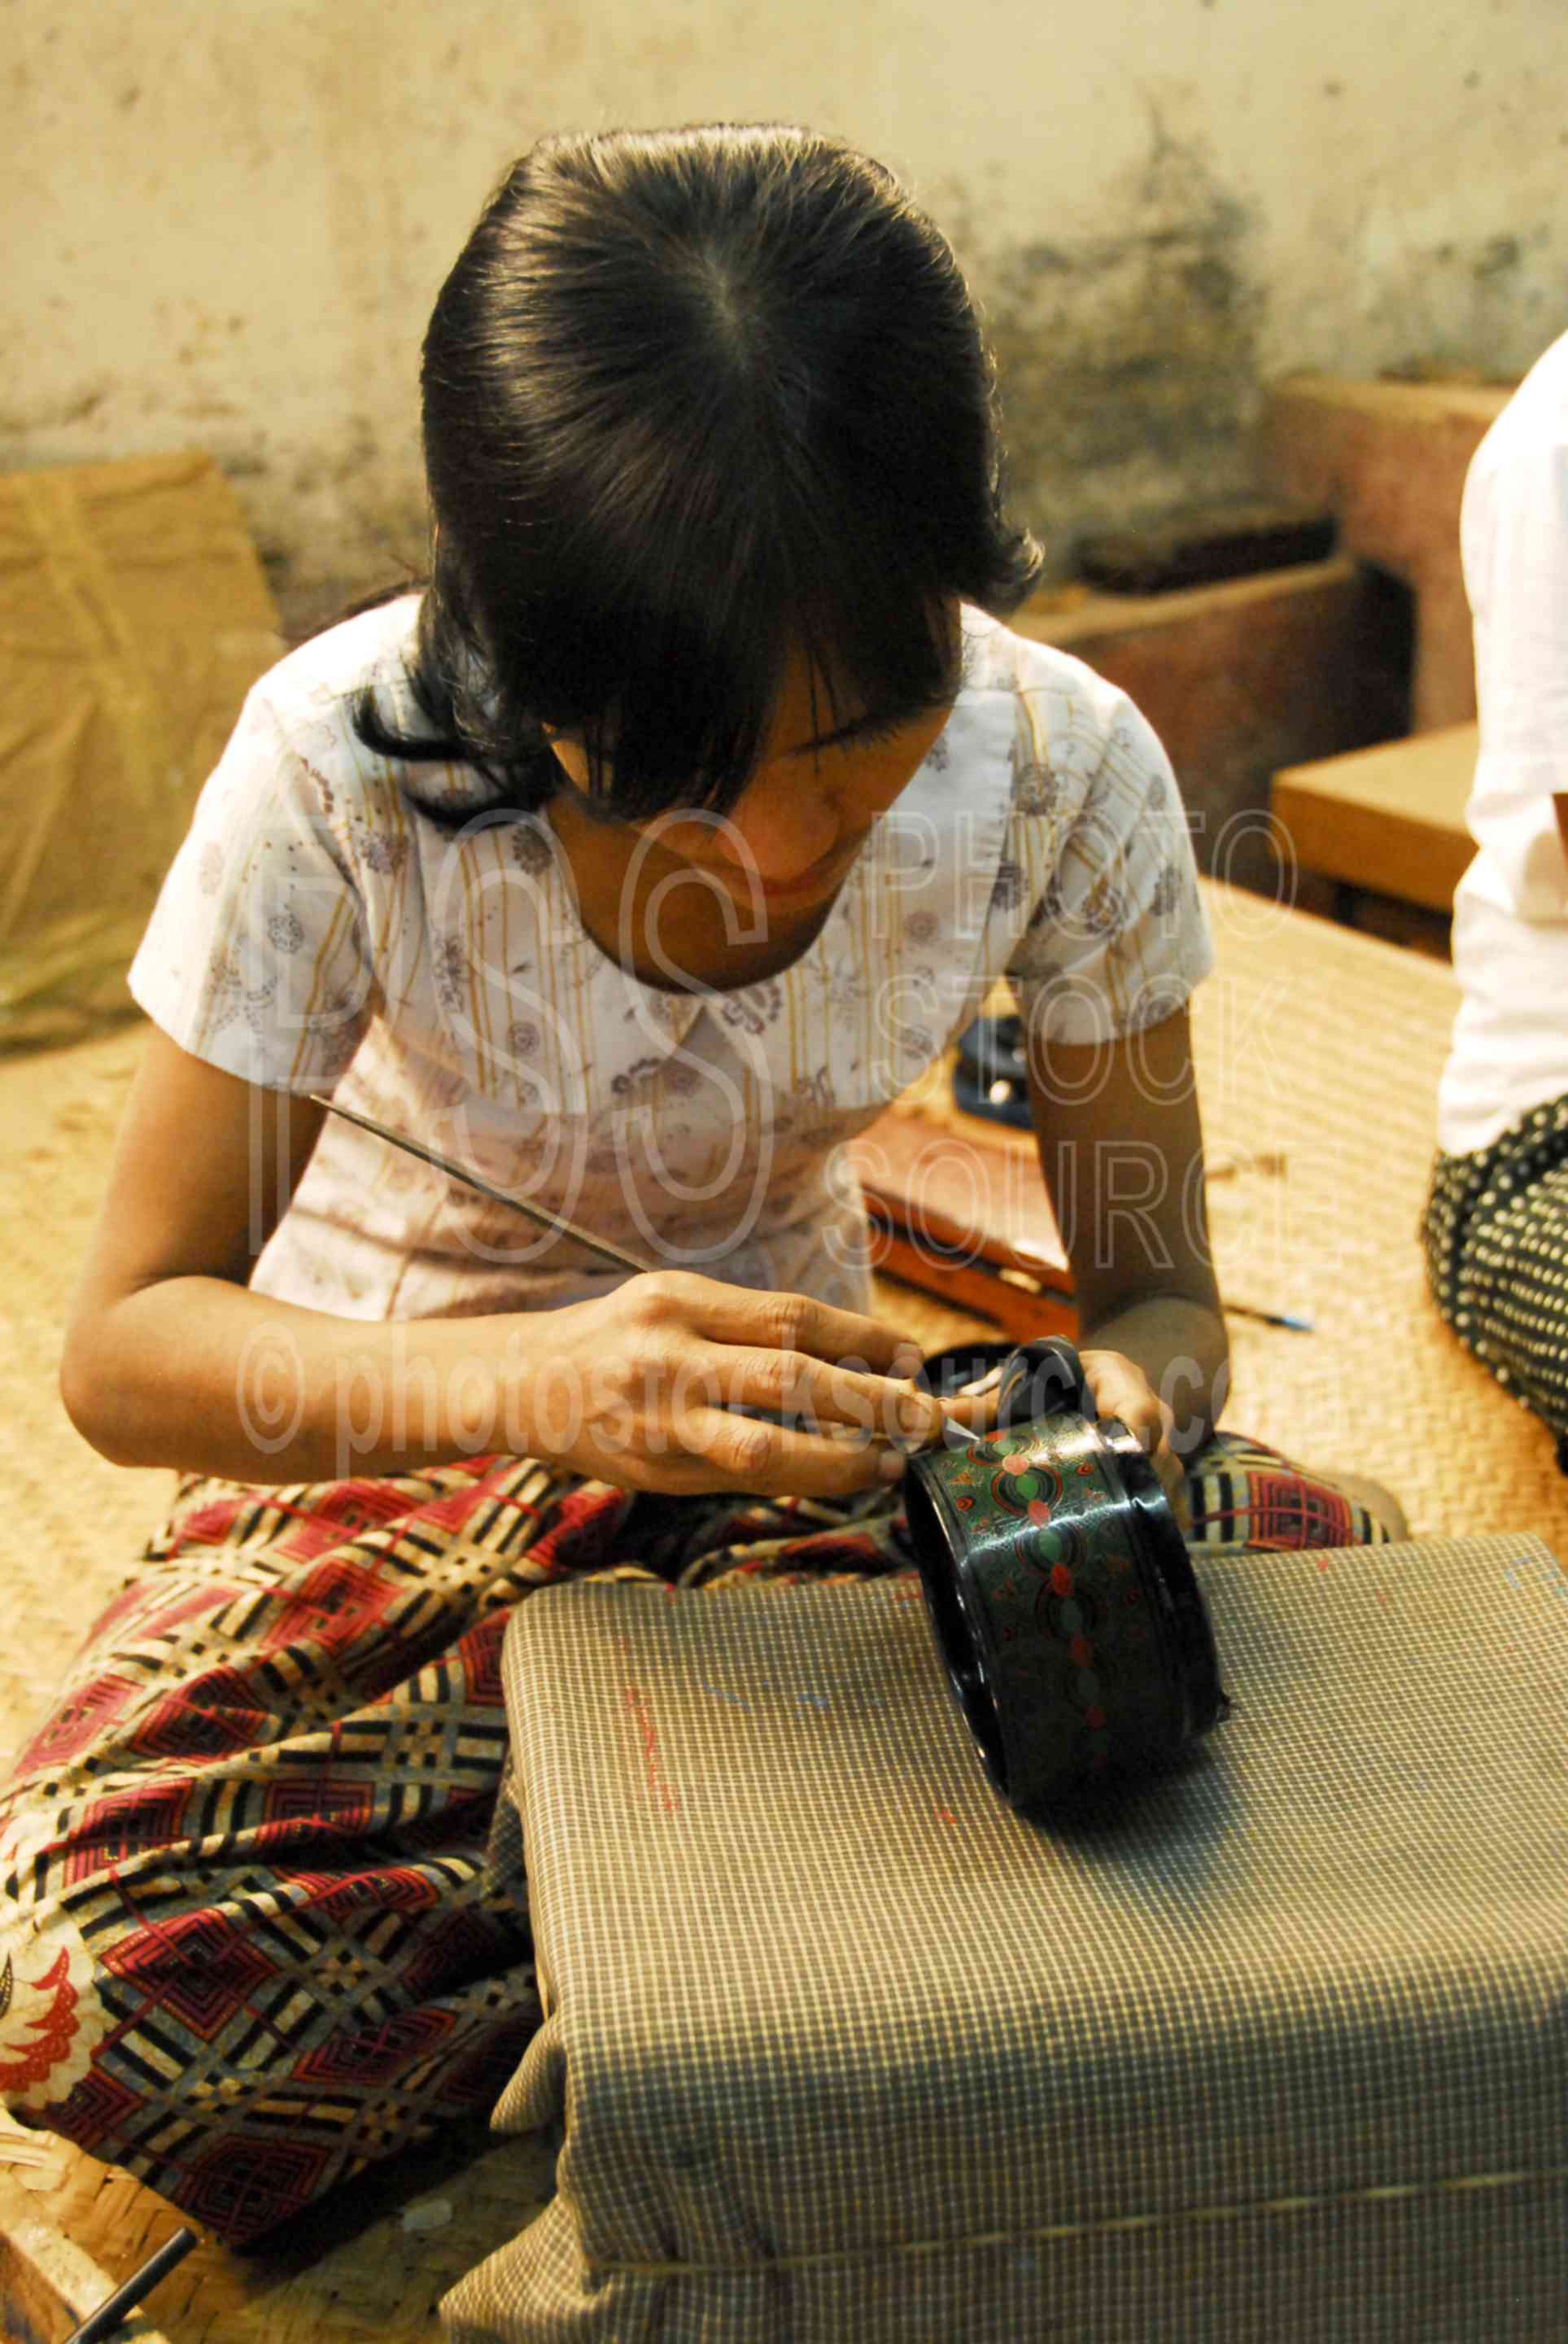 Woan Etching Lacquerware,myanmar,men,working,factory,manufacture,art,lacquer,lacquerware,etching